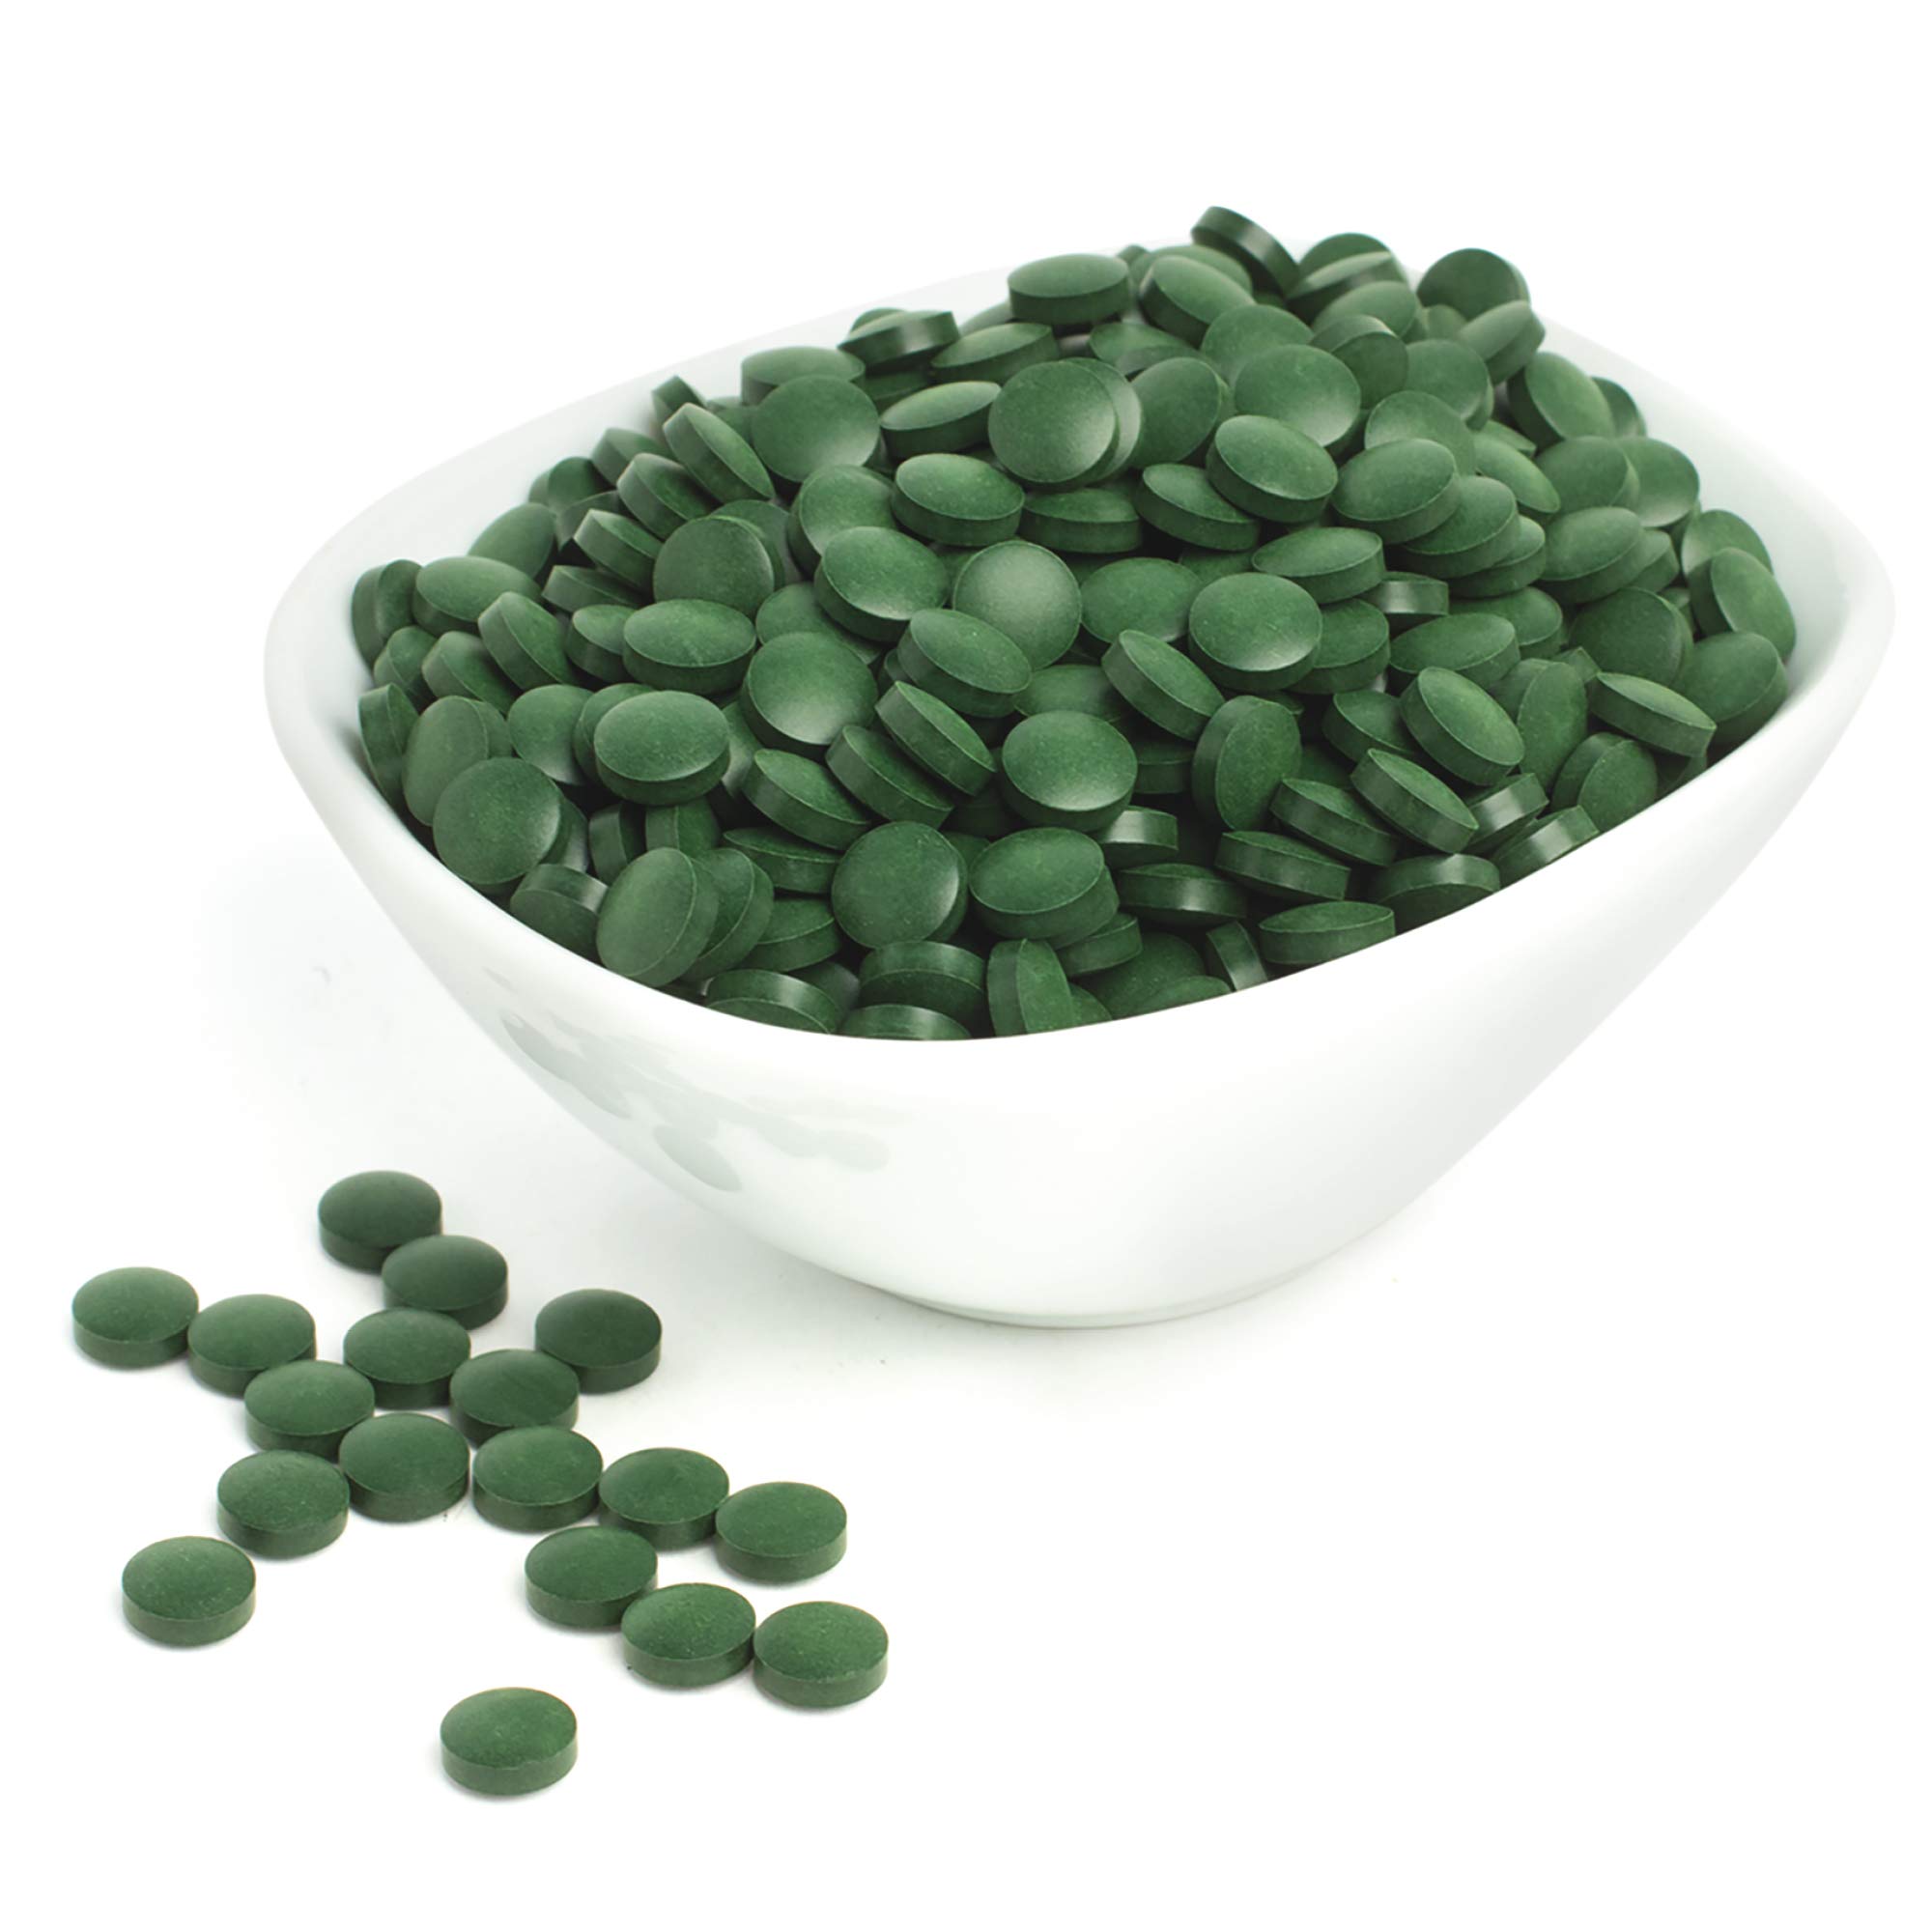 Sunfood Raw Spirulina Chlorella Tablets | 50/50 Blend | Chlorophyll Rich | Broken Cell Wall | Blue Green Algae Superfood | Organic Non GMO | Natural Vegan Protein | 100% Pure | 4 oz Bag| 456 Tablets